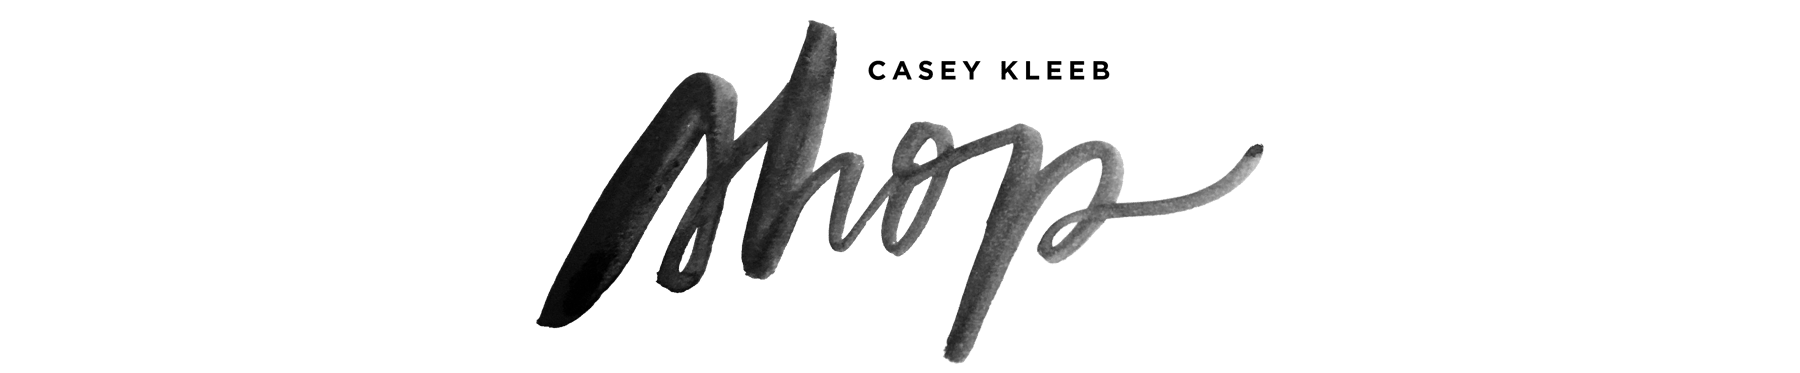 Casey Kleeb